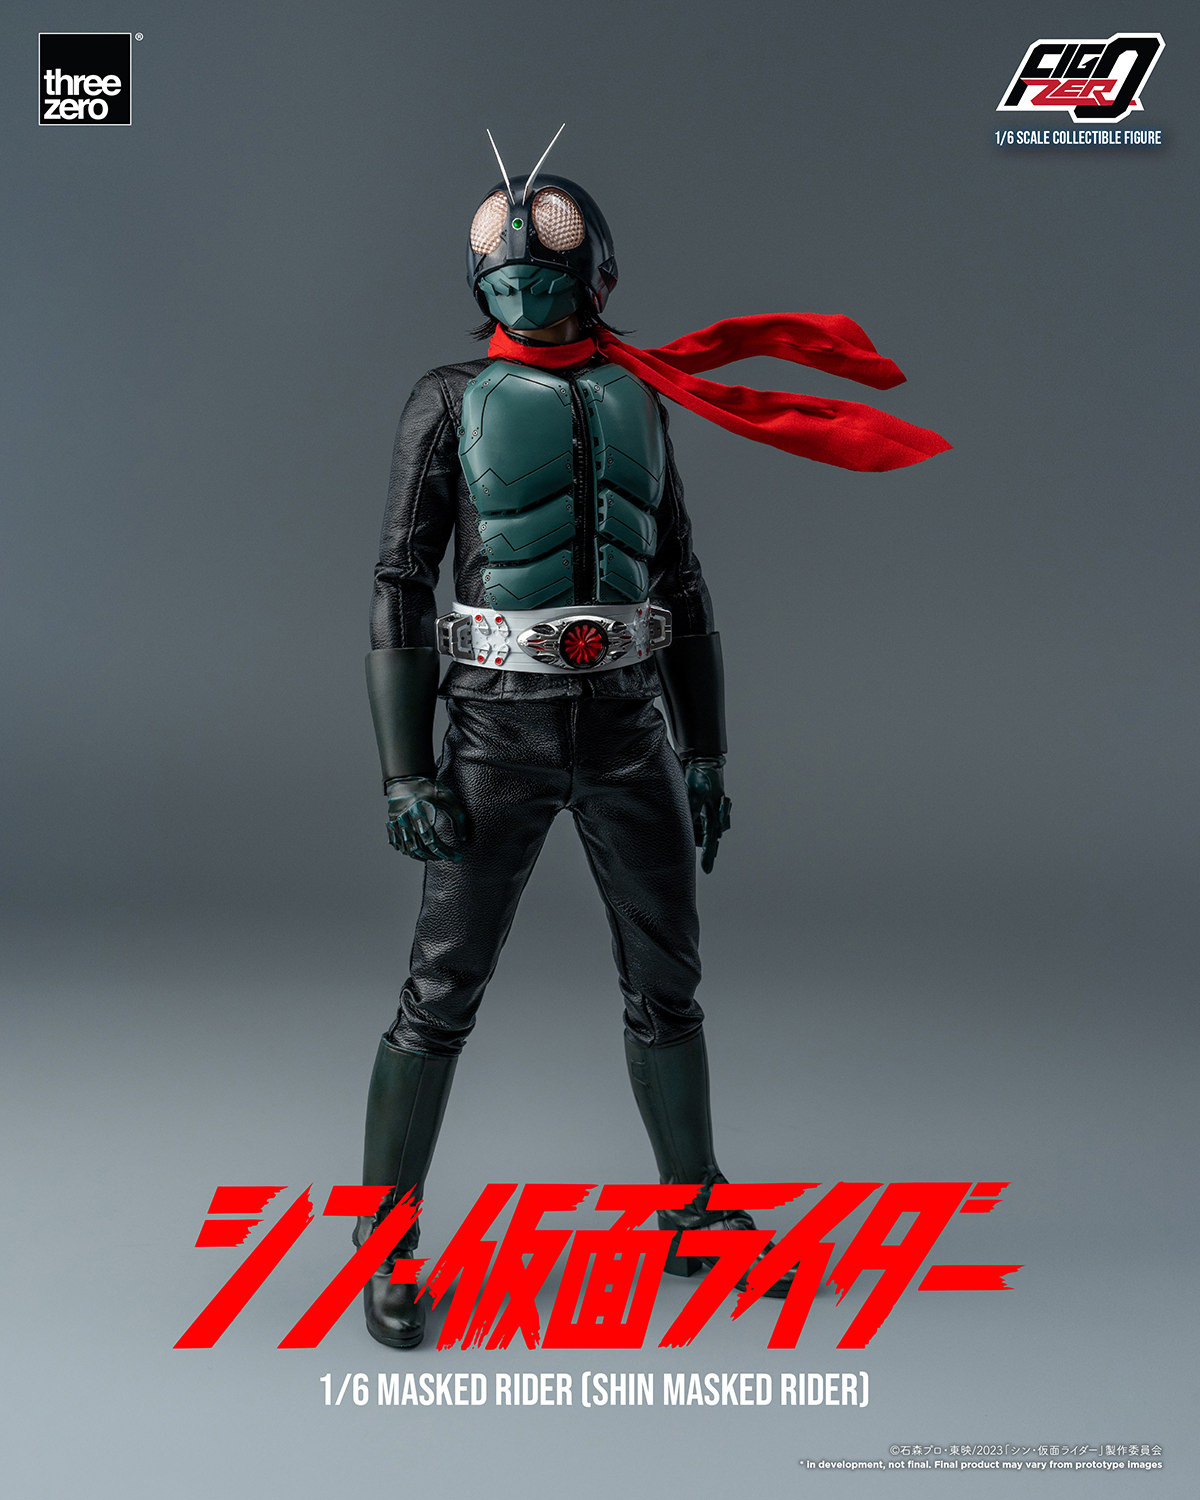 Shin Masked Rider (Prototype Shown) View 11